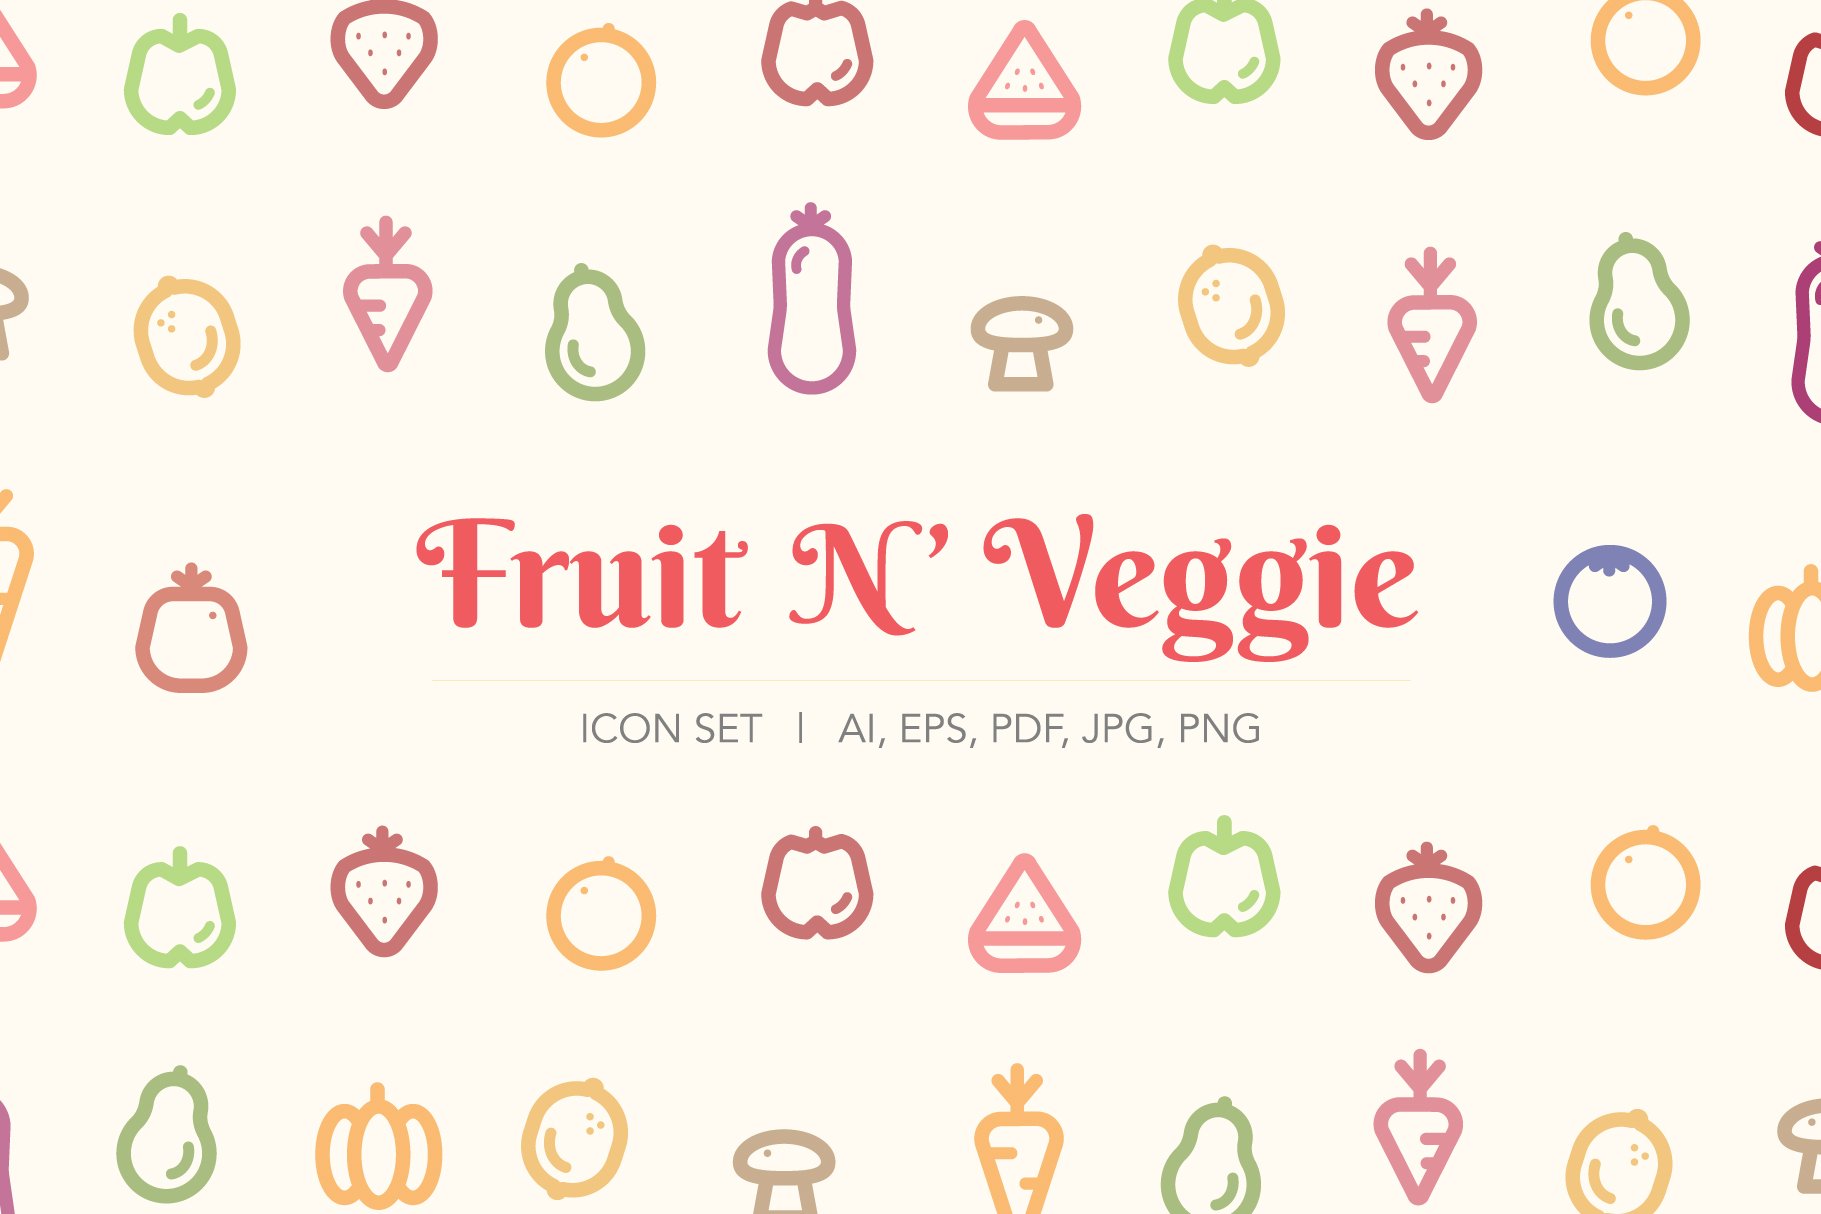 Fruit N' Veggie Icon Set cover image.